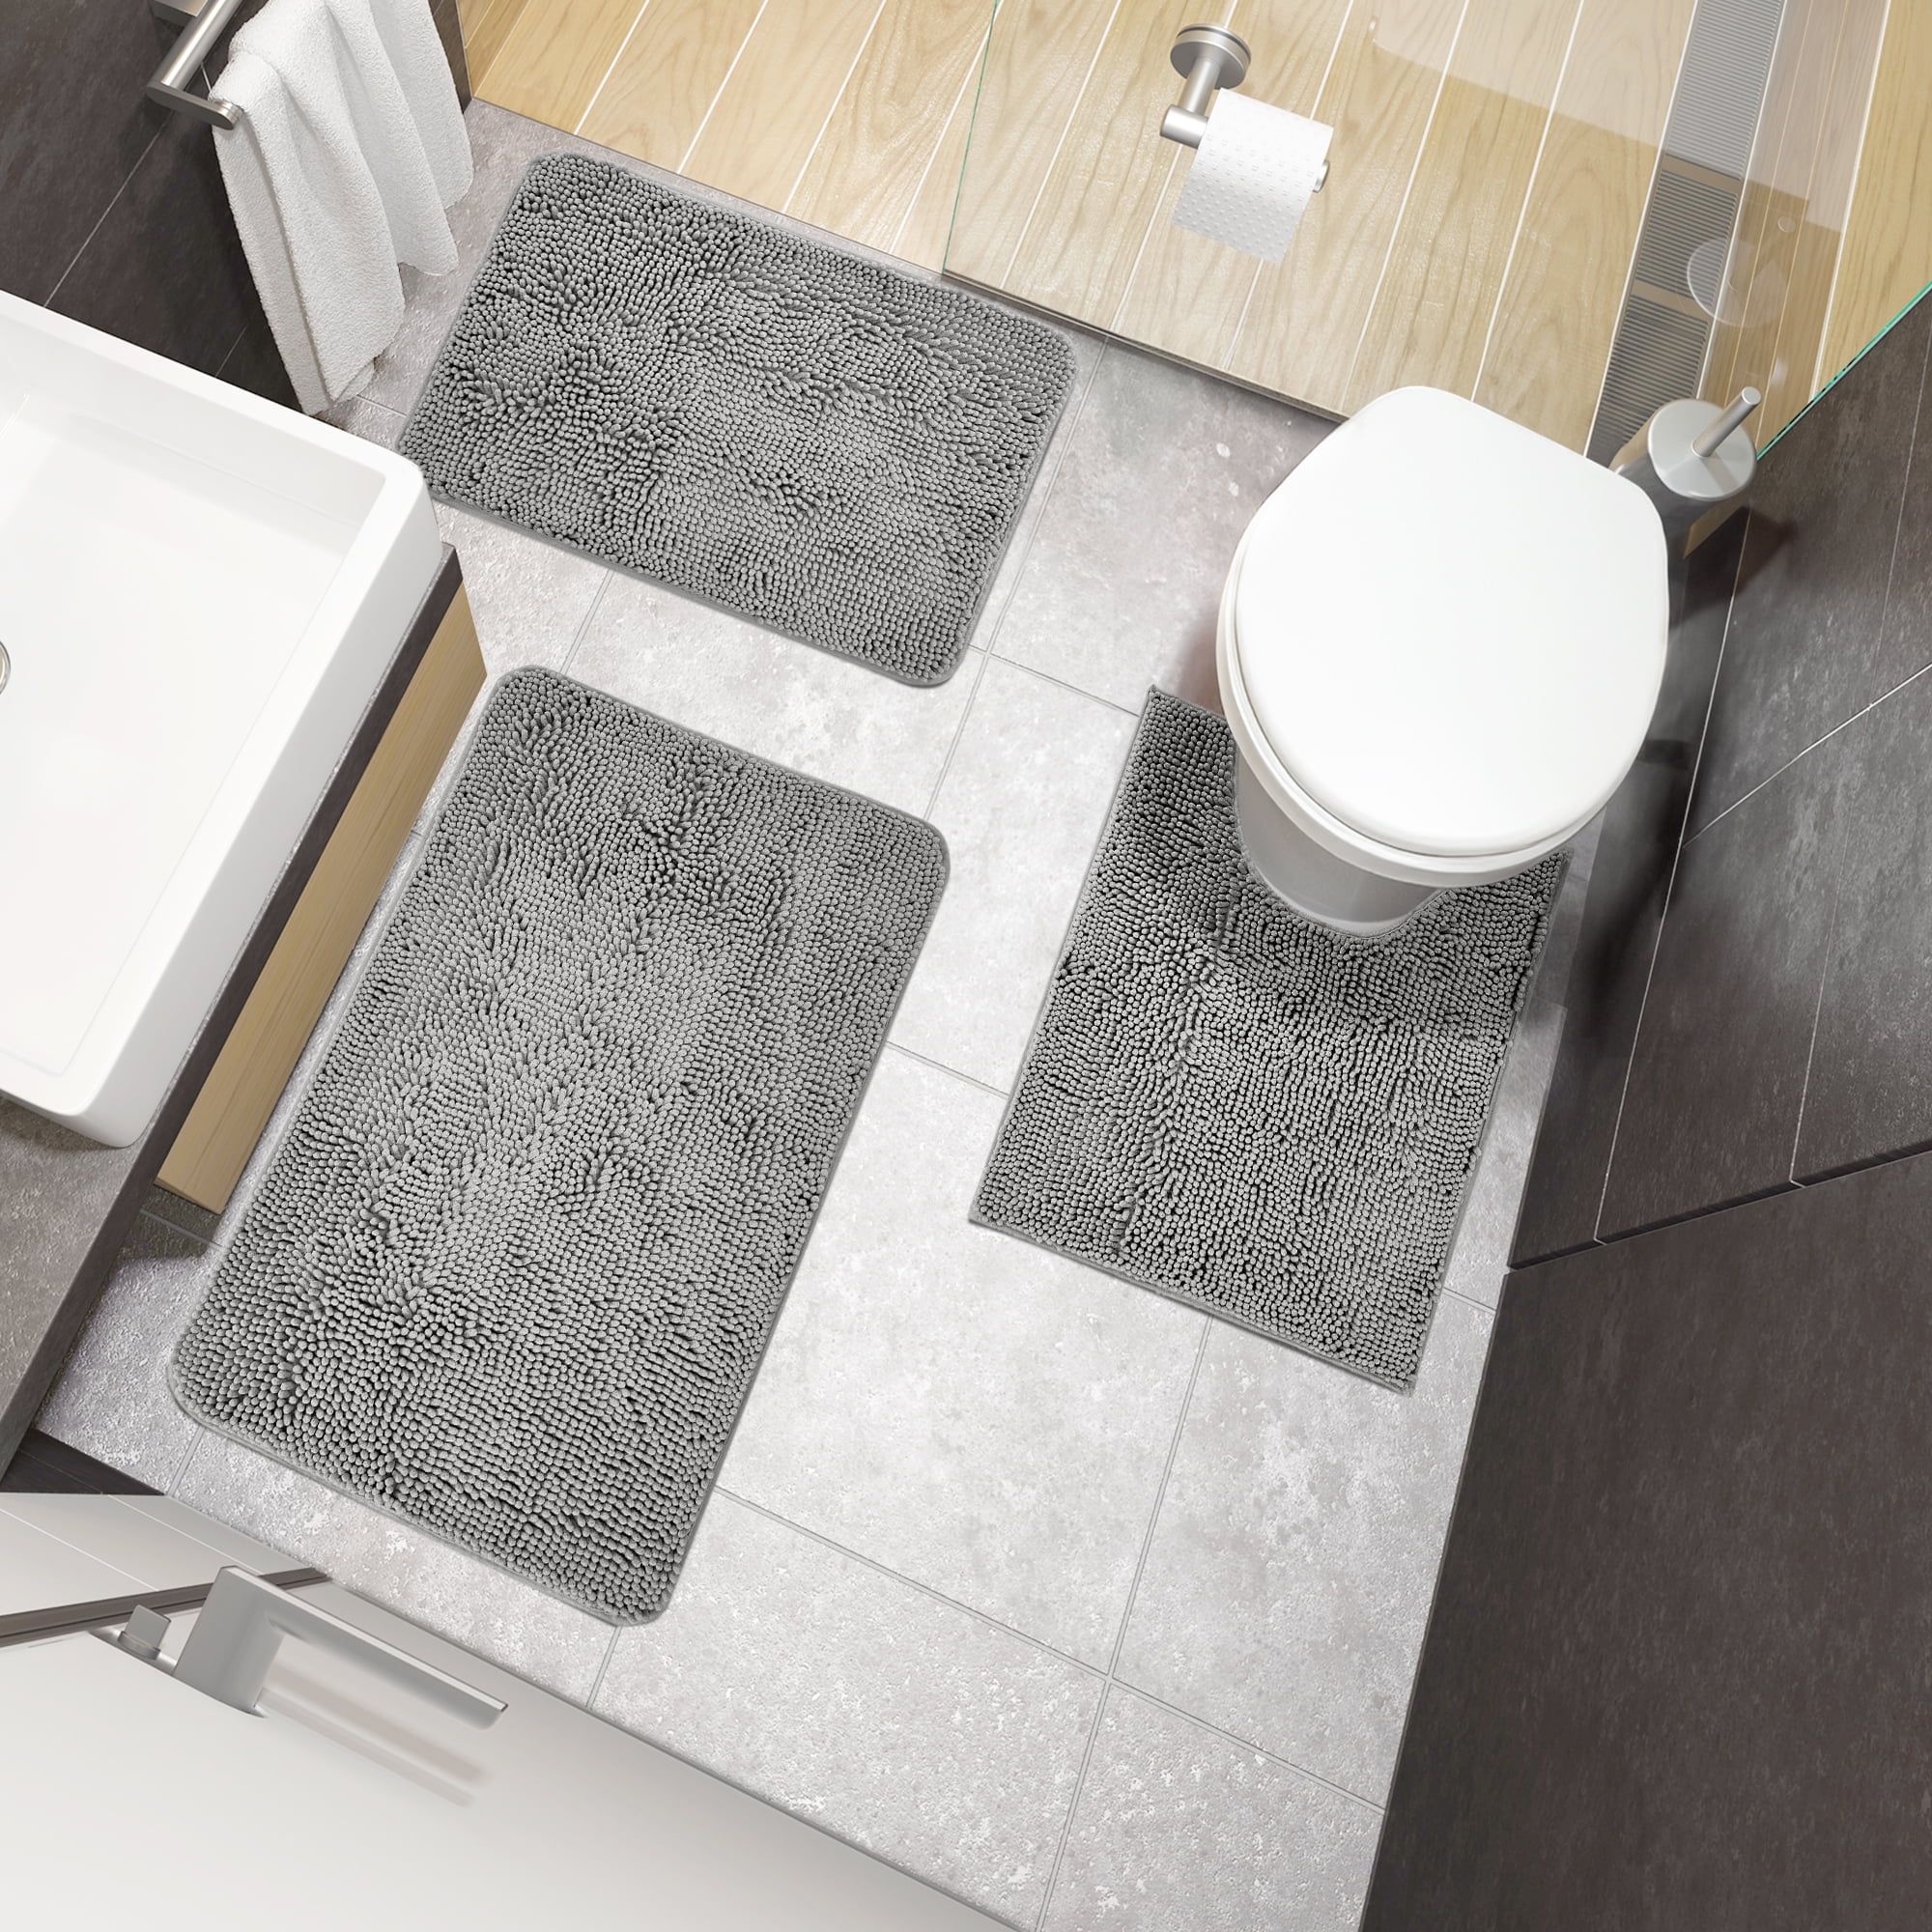  Internet's Best Microfiber Chenille Bath Mat - Non Slip Bathroom  Rug - Soft Absorbent Carpet - Fast Drying Shower (48 x 29, Gray) : Home &  Kitchen